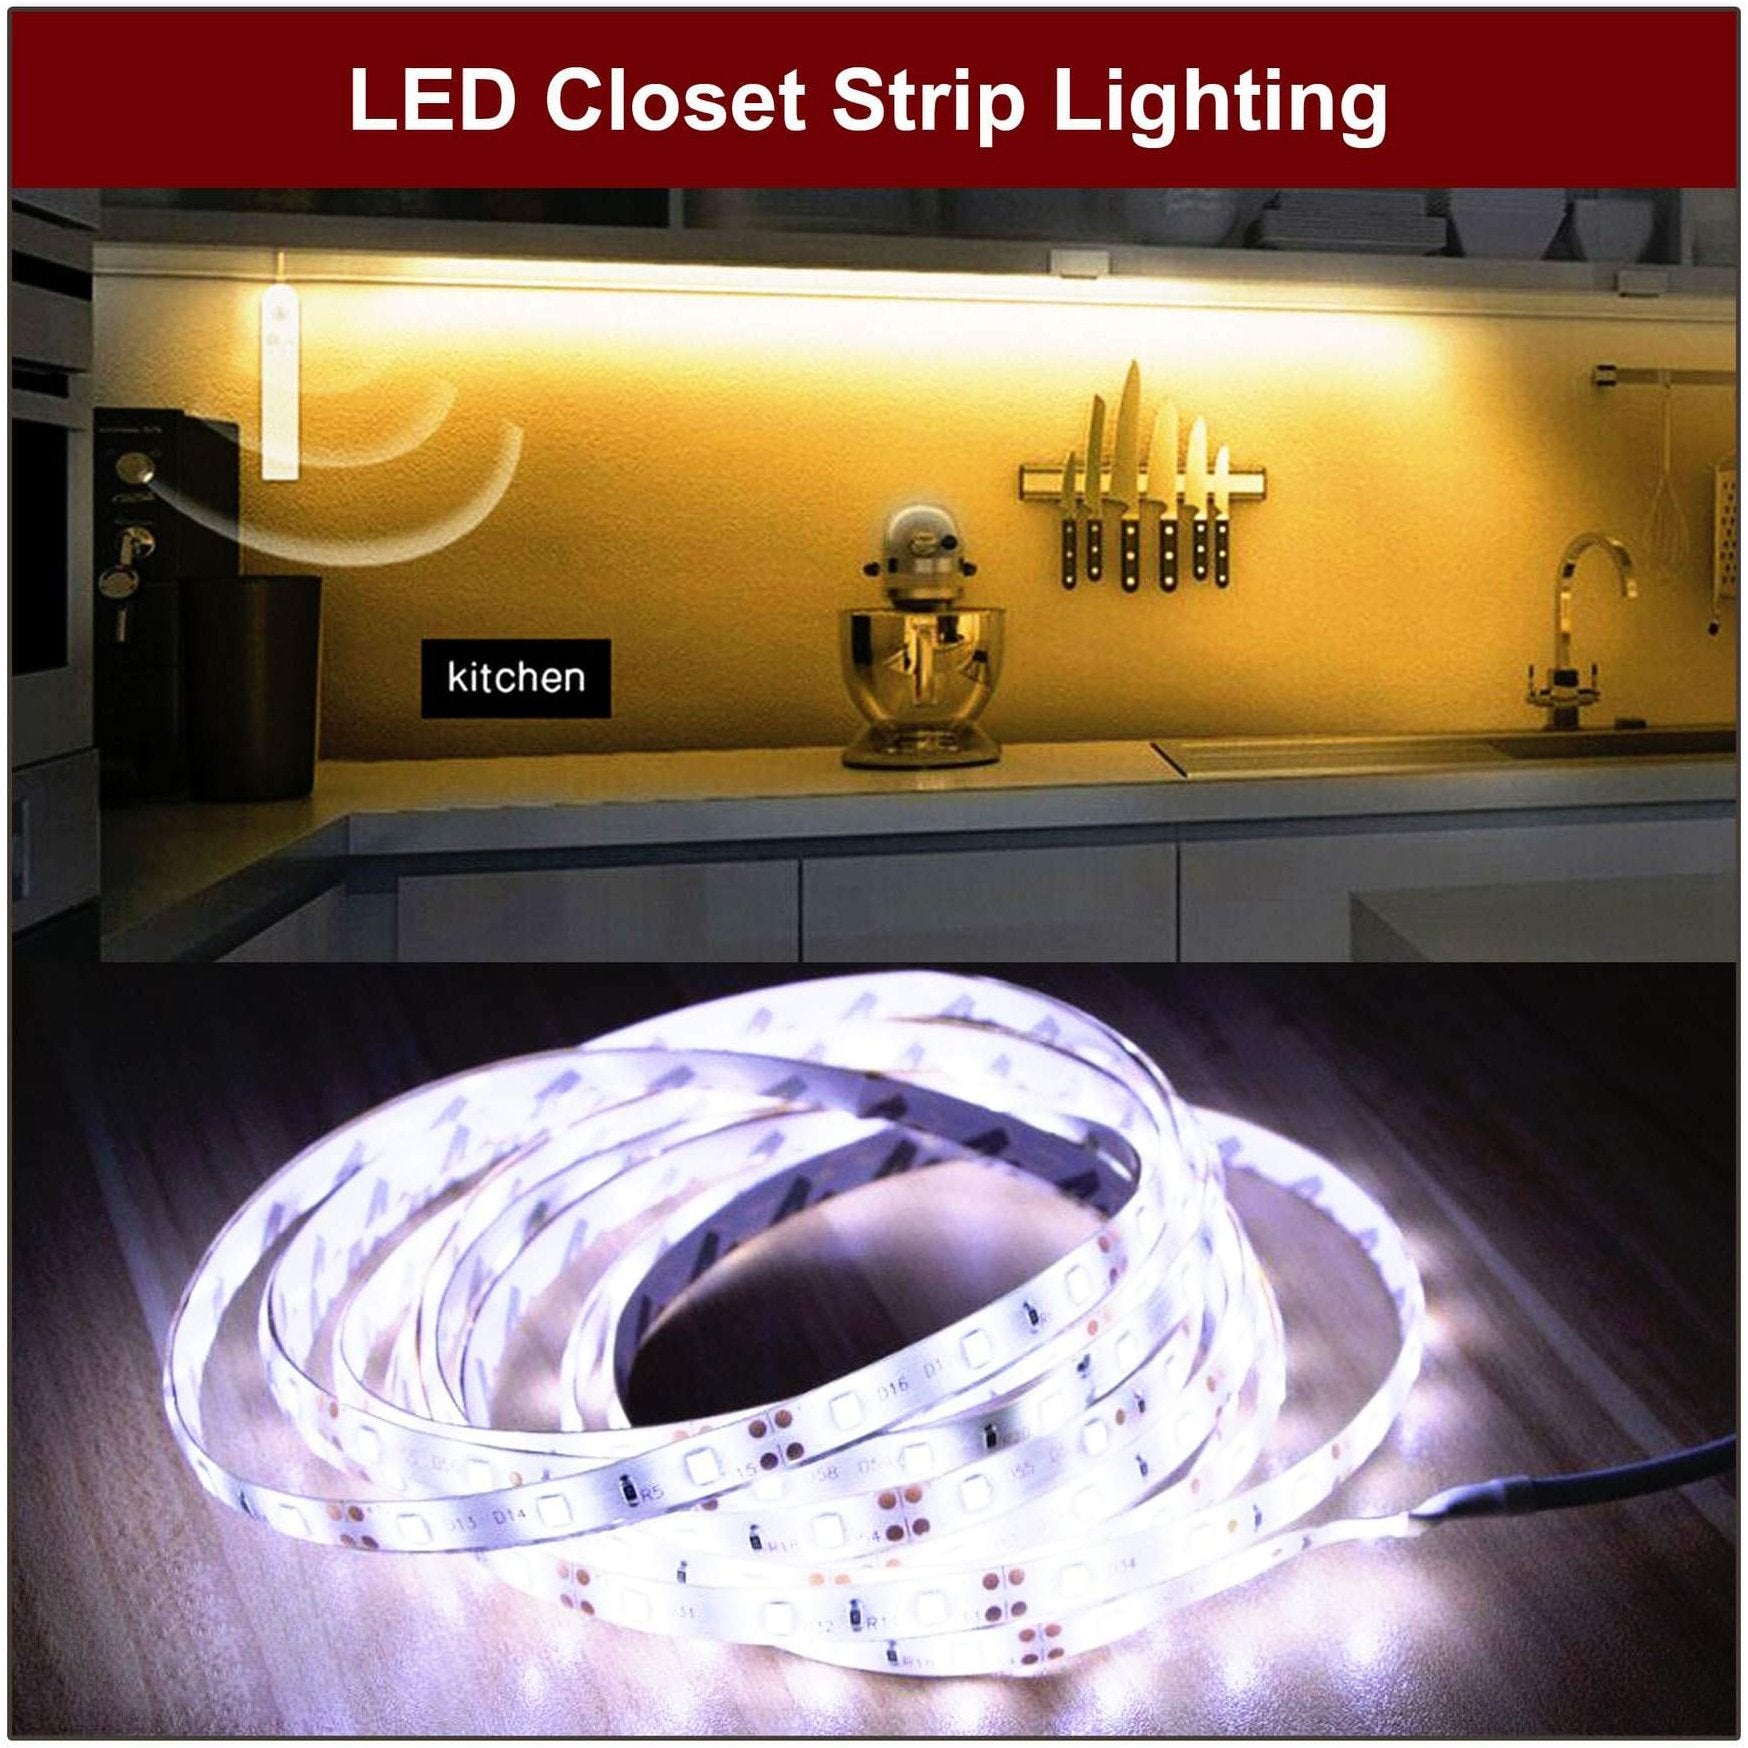 😍 LAST DAY PROMOTION-70%OFF 😍— LED Closet Strip Lighting